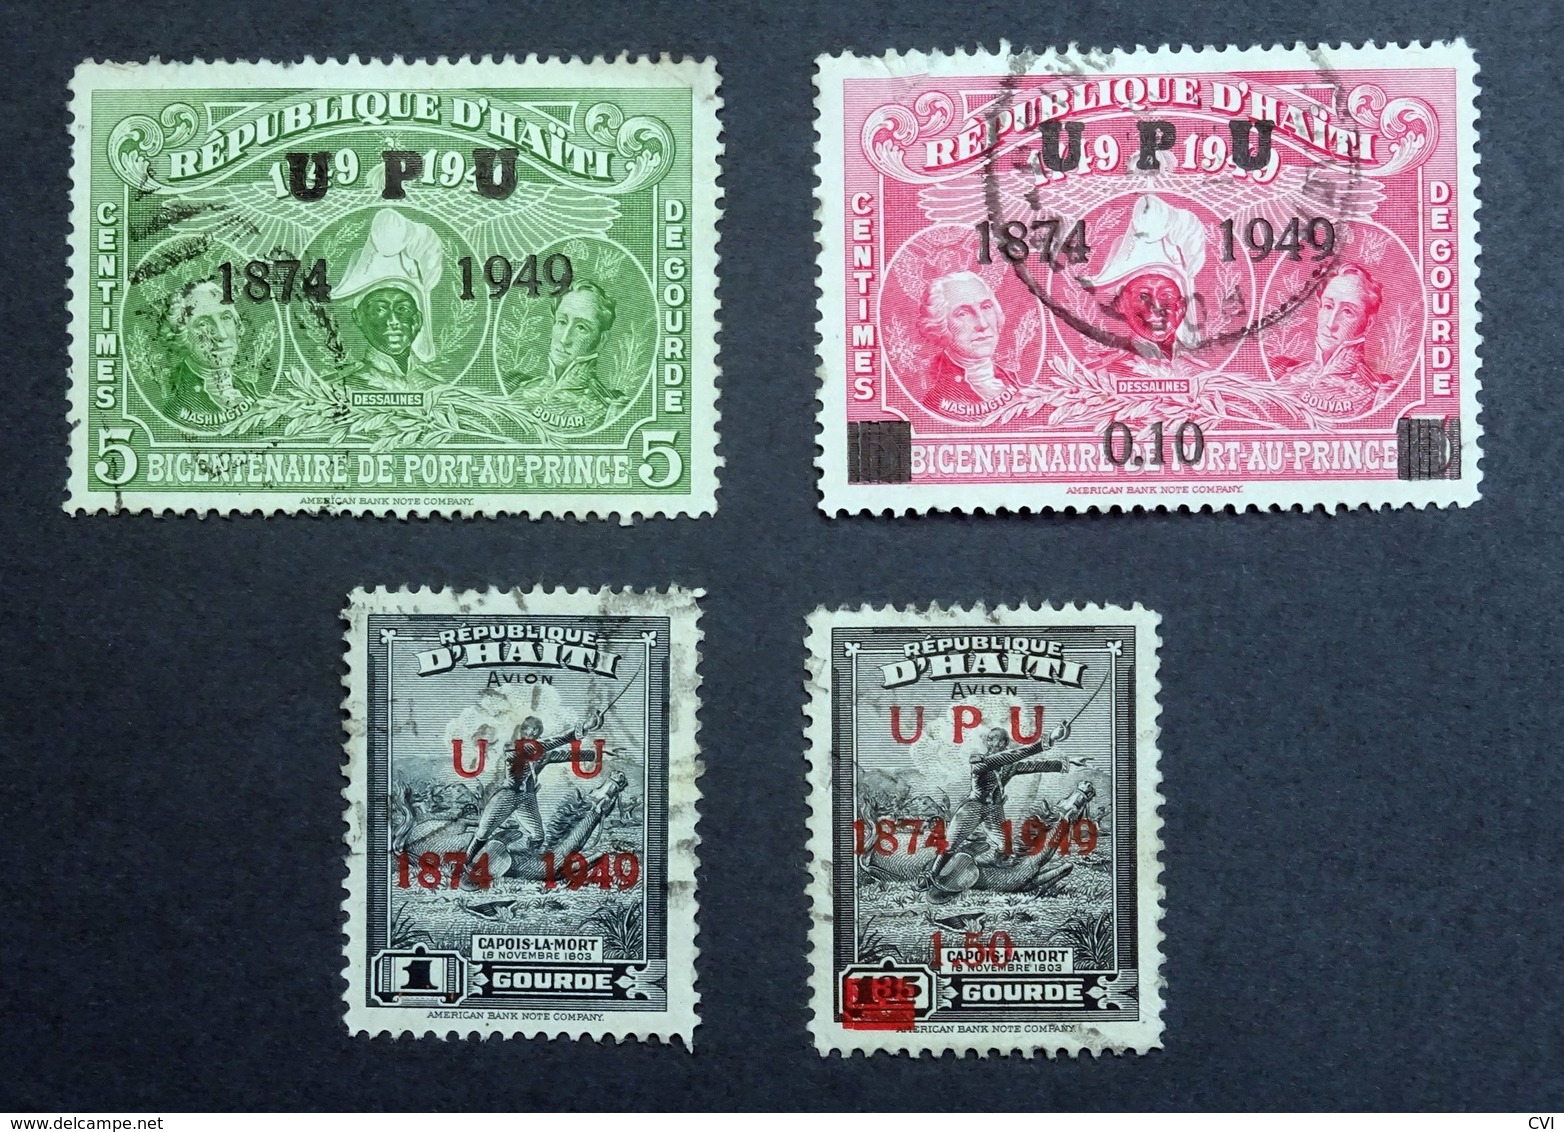 Haiti 1950 "THE 75TH ANNIVERSARY OF UPU" Overprint Used Selection. - Haïti